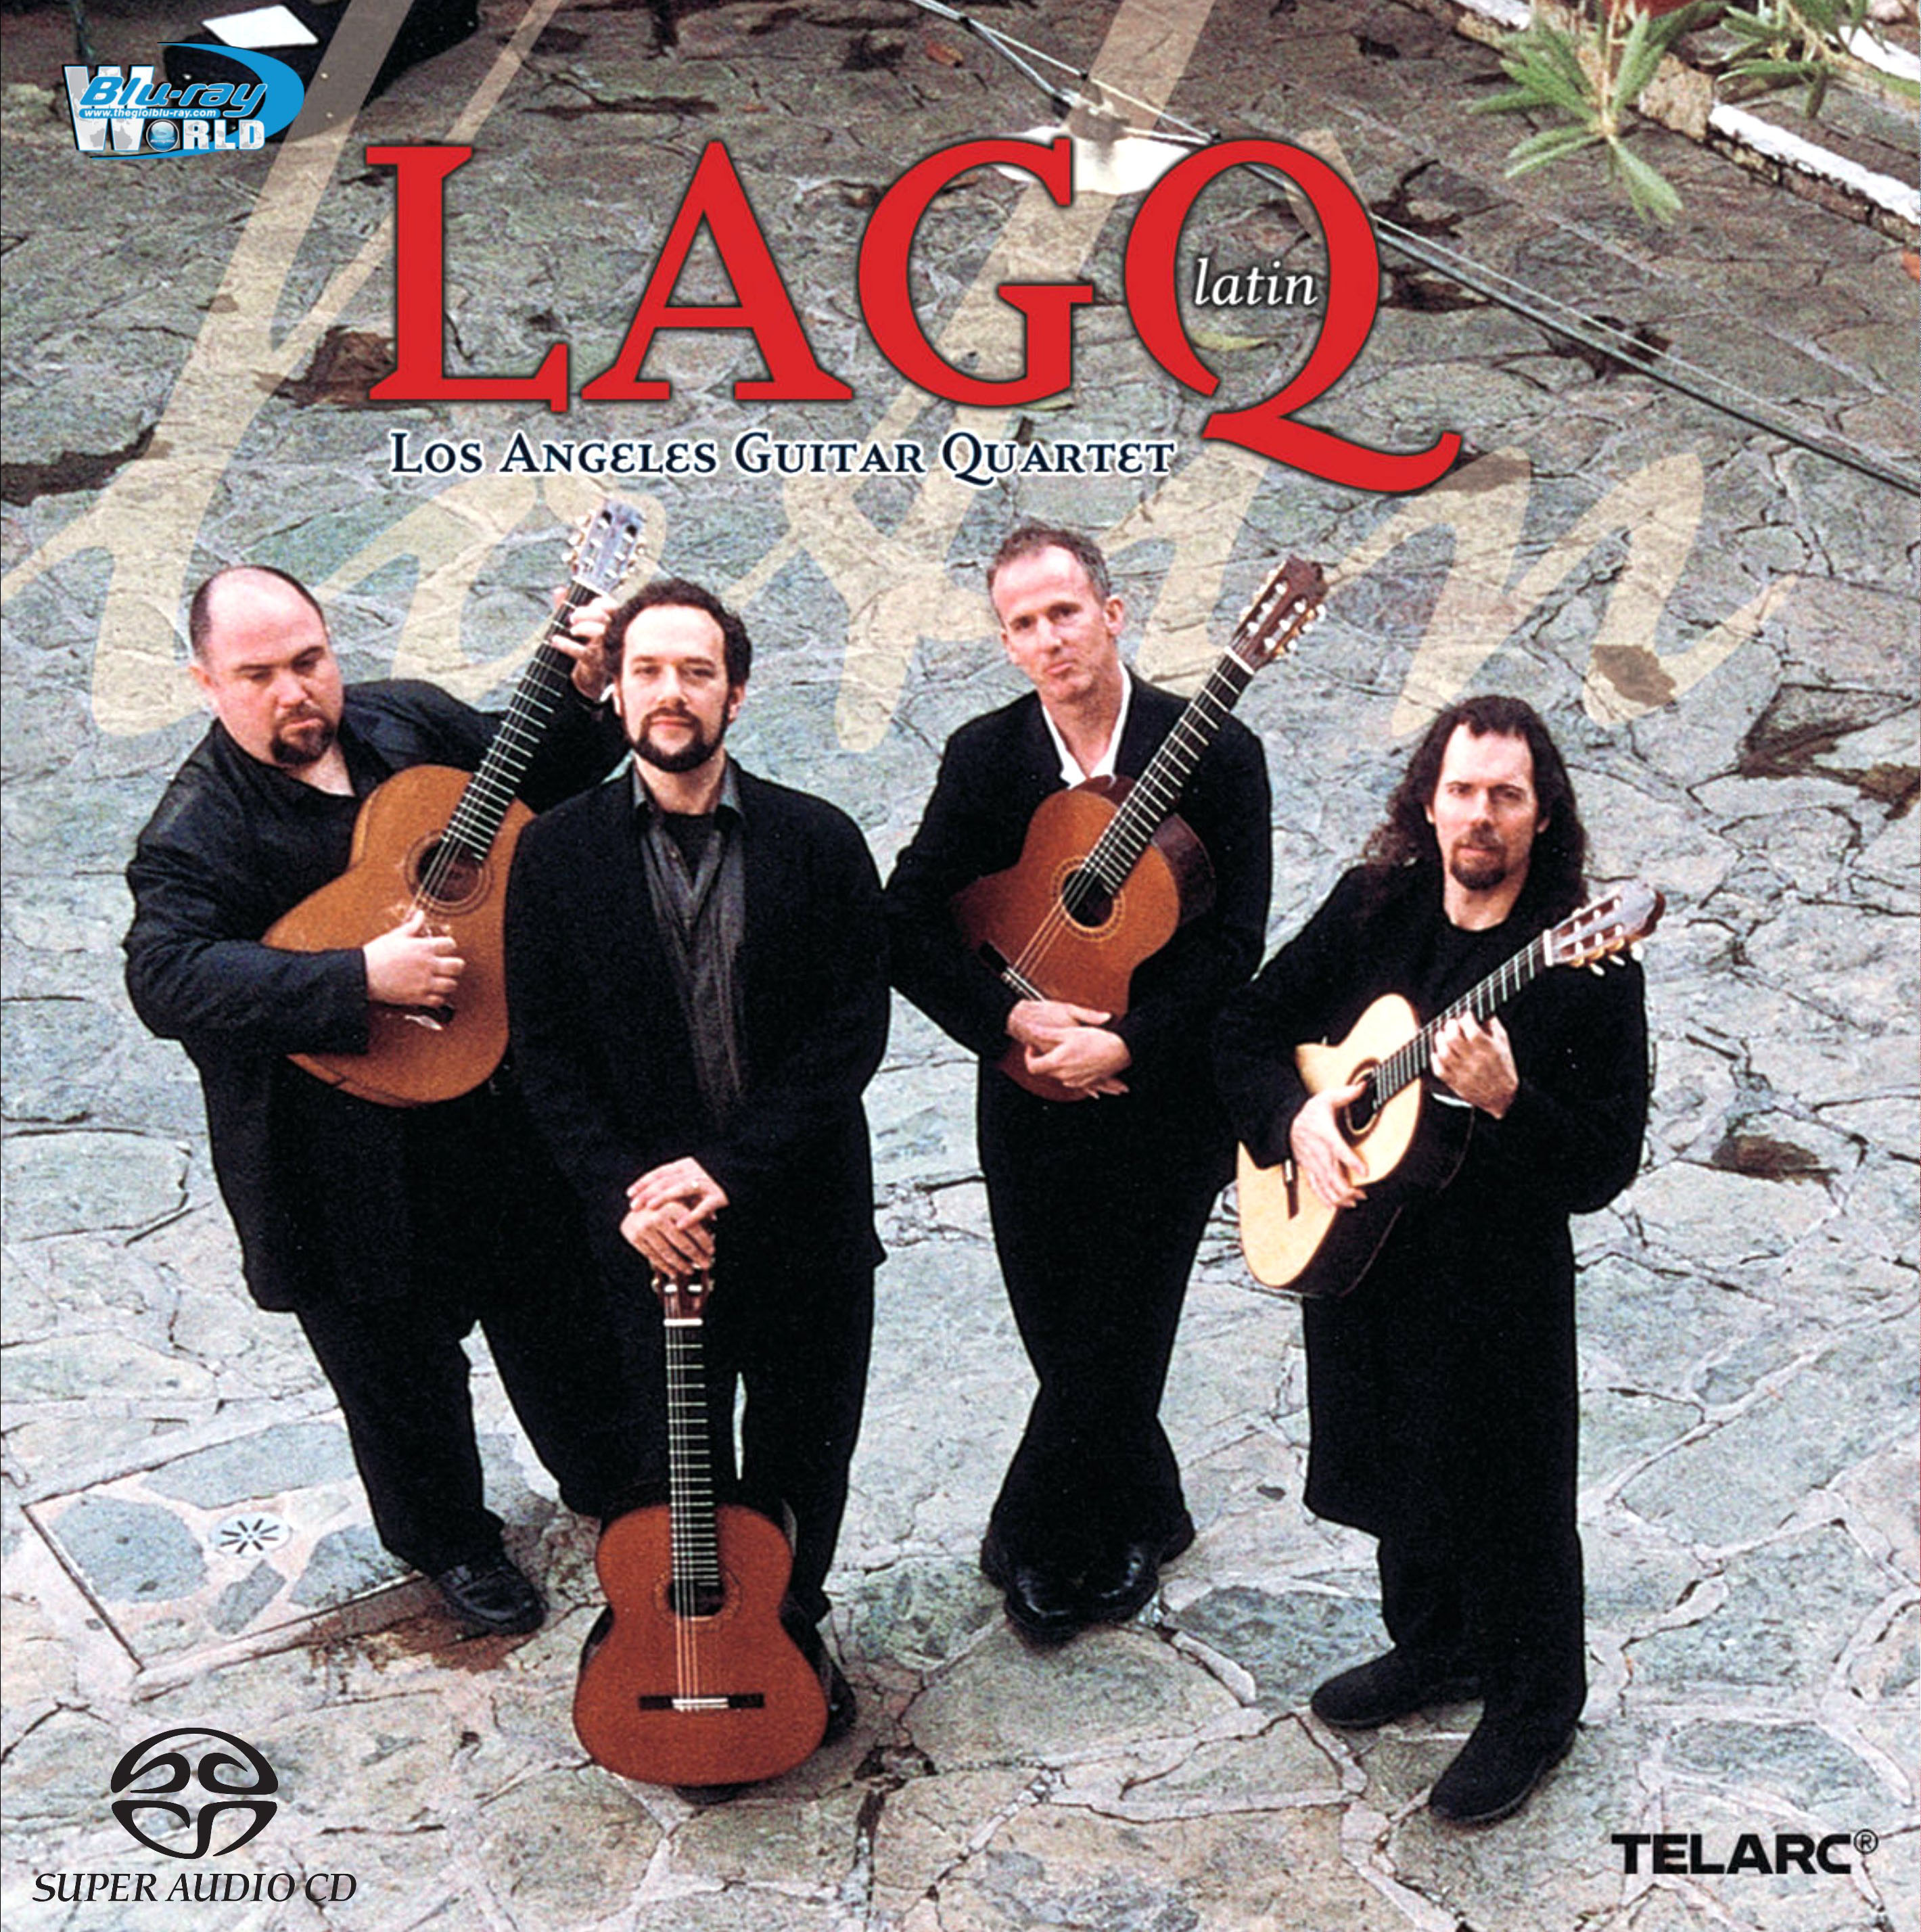 SA121.Los Angeles Guitar Quartet-Latin  SACD-R ISO  DSD  2.0 + 5.1 